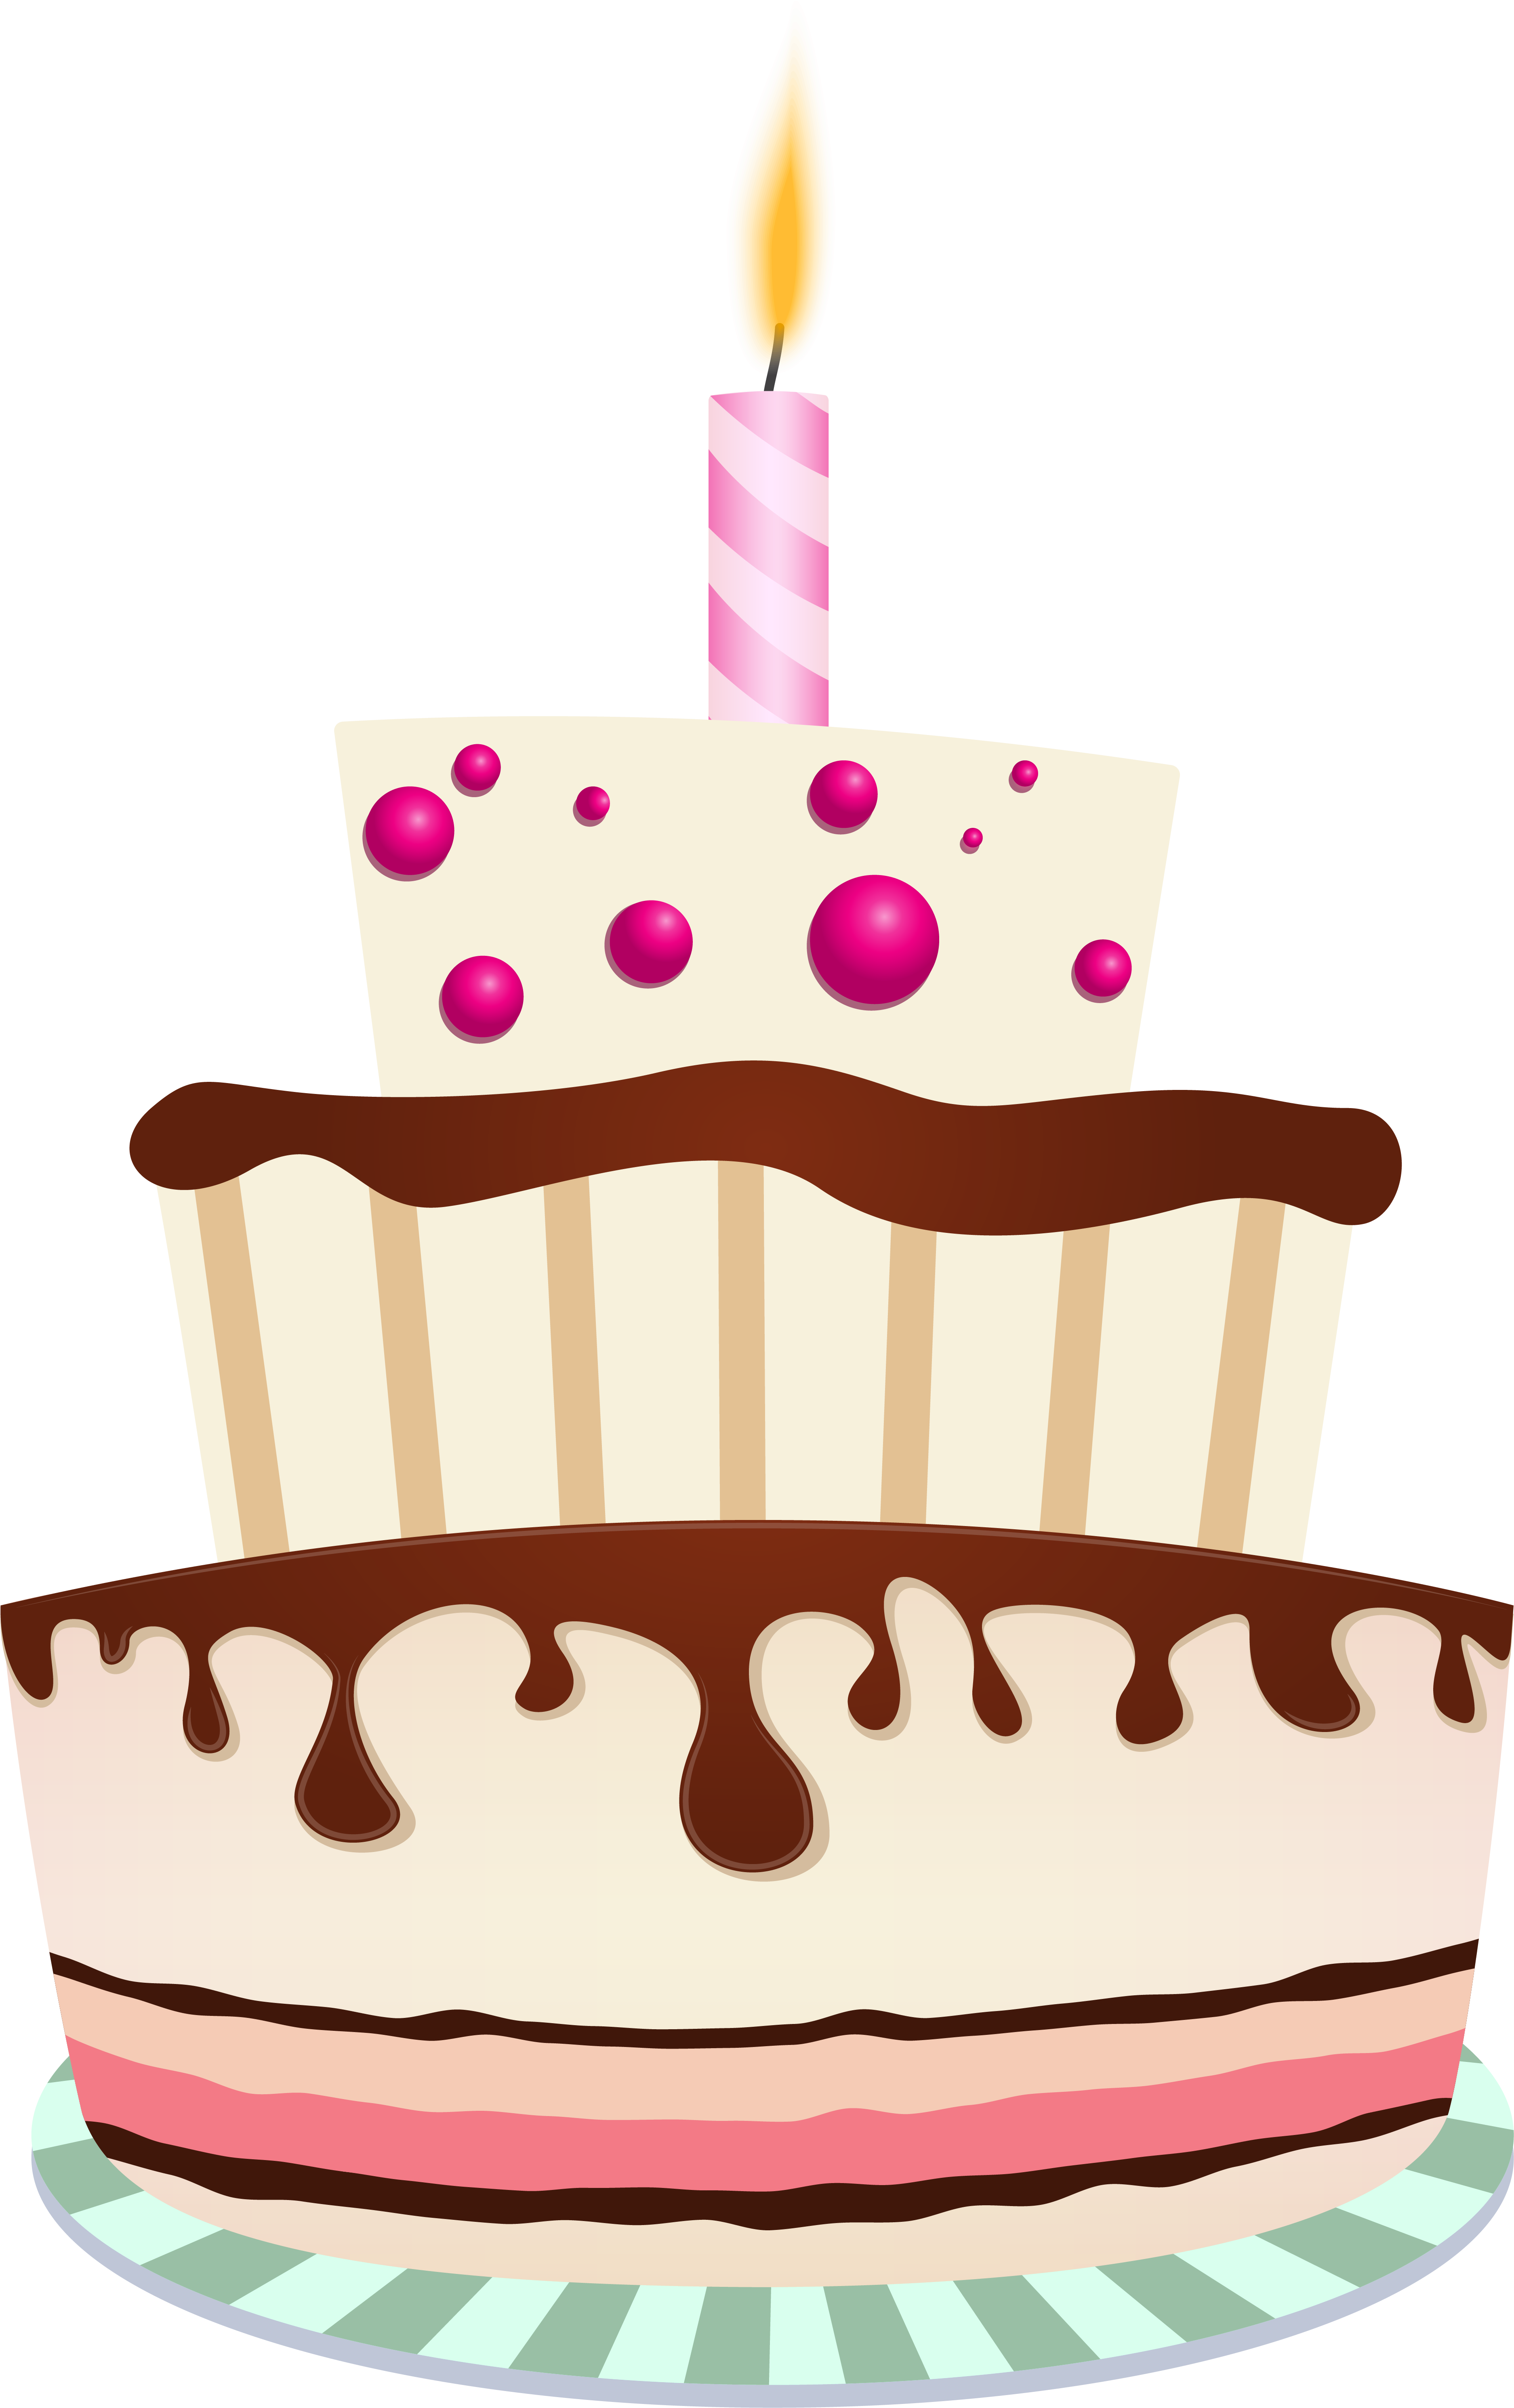 Birthday Cake Candle Celebration Graphic PNG image